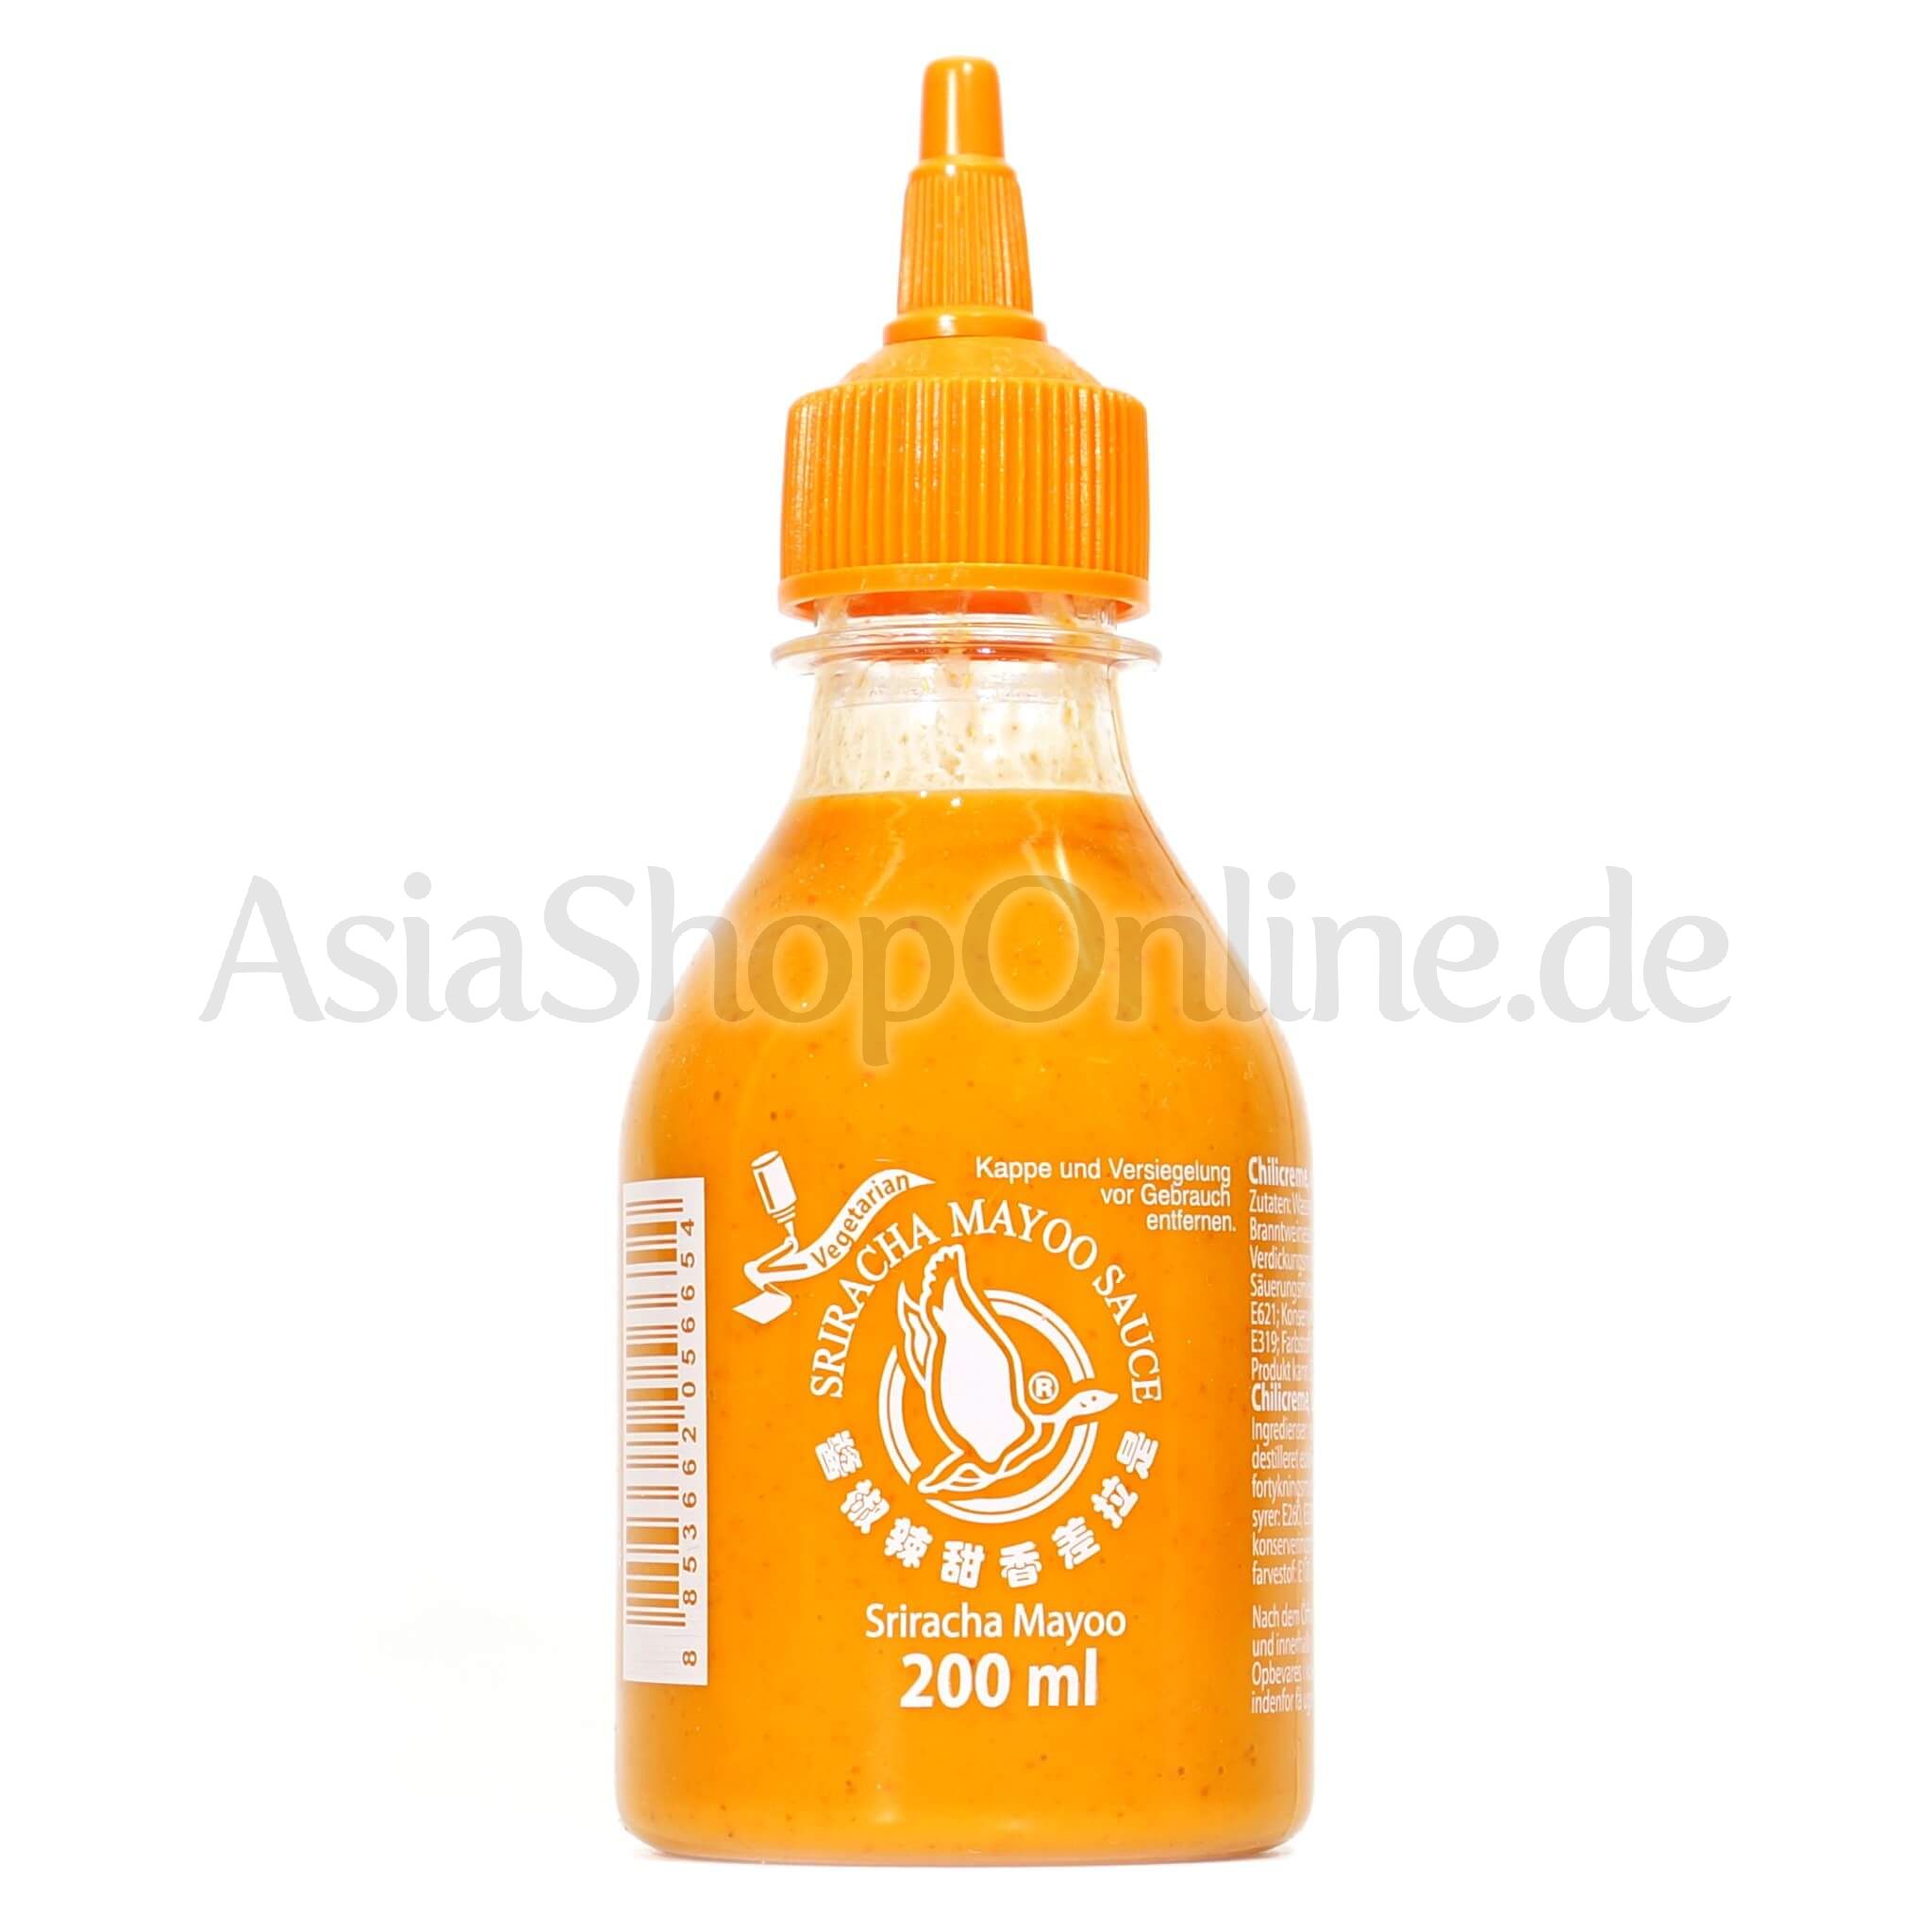 Sriracha Mayo Sauce - Flying Goose - 200ml